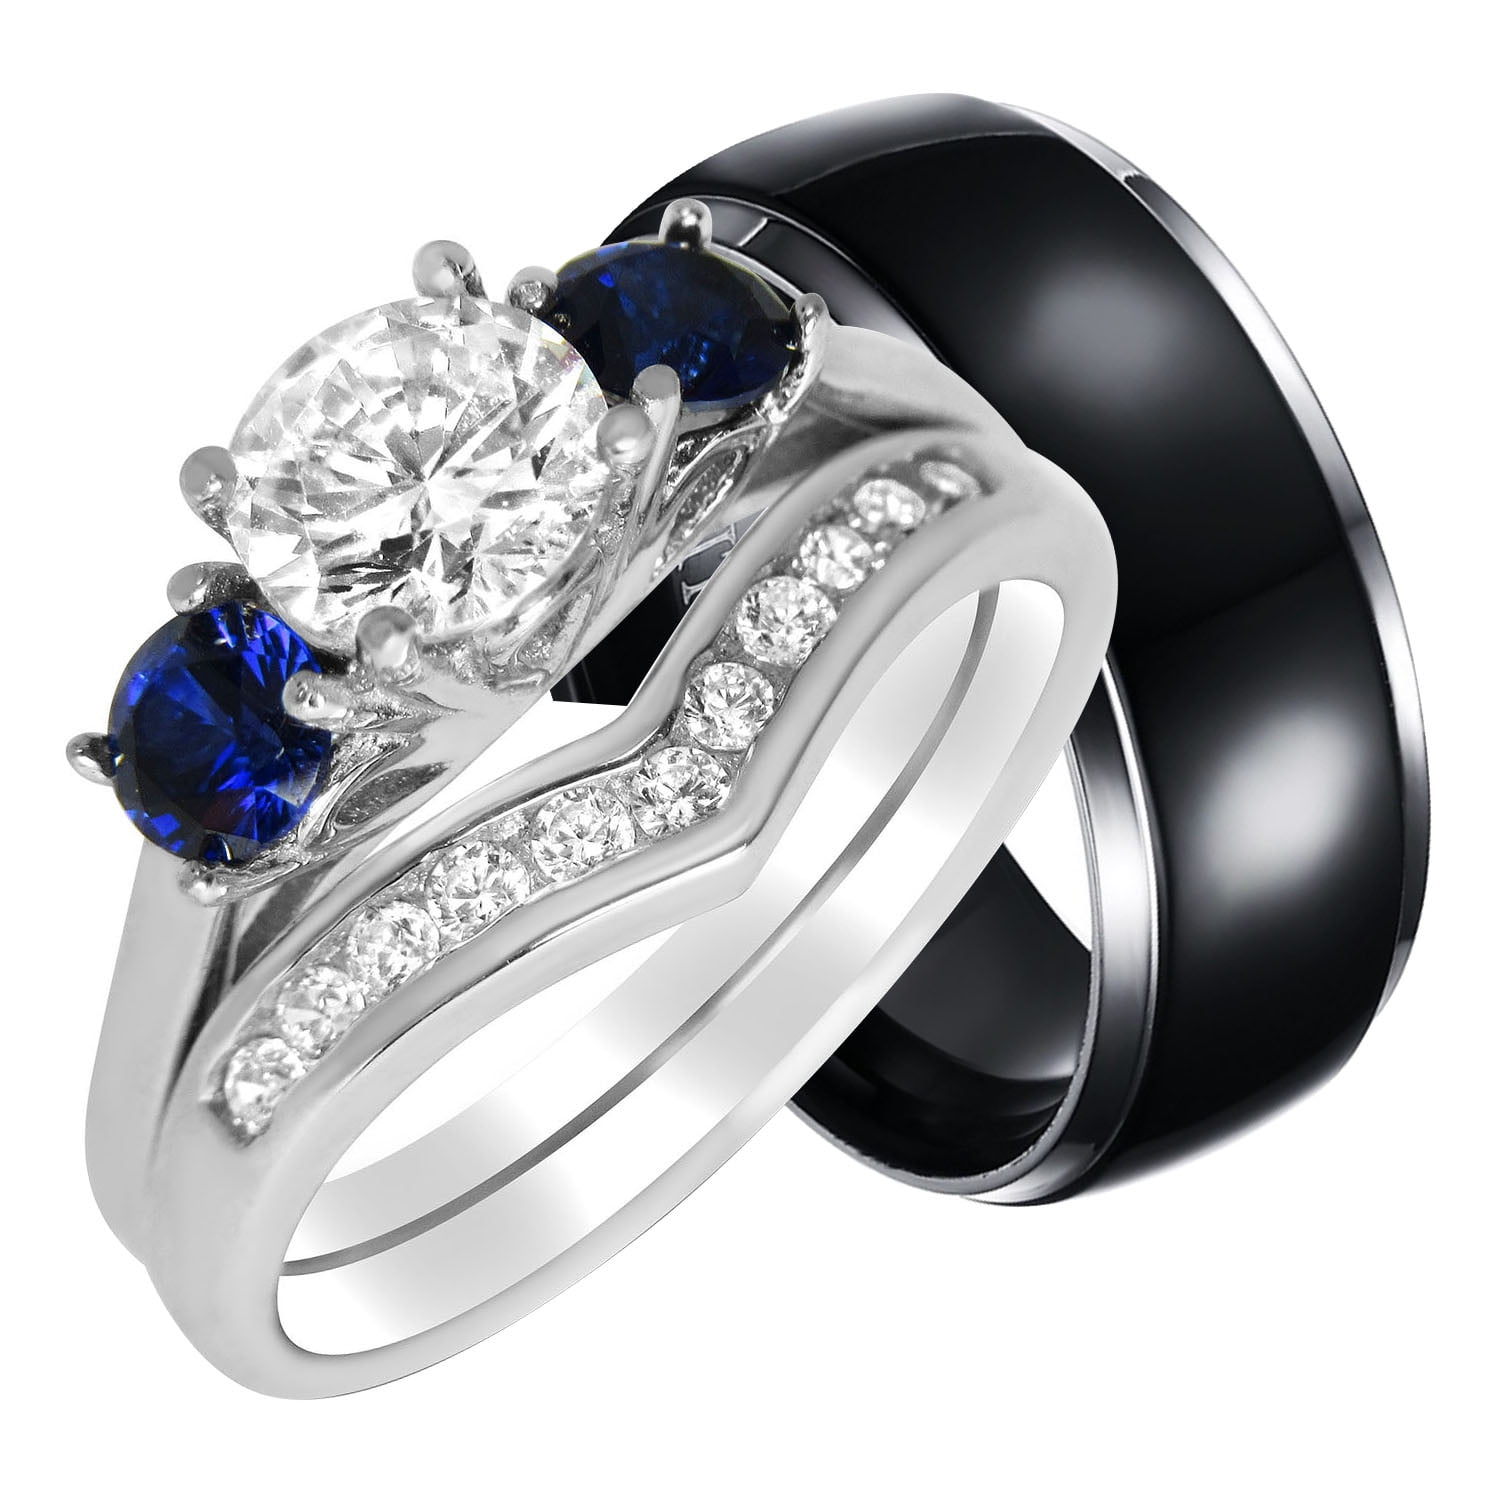 5.5MM Titanium Rings Wedding Bands Set Diamond & Sapphire Simulated Size 6-13 